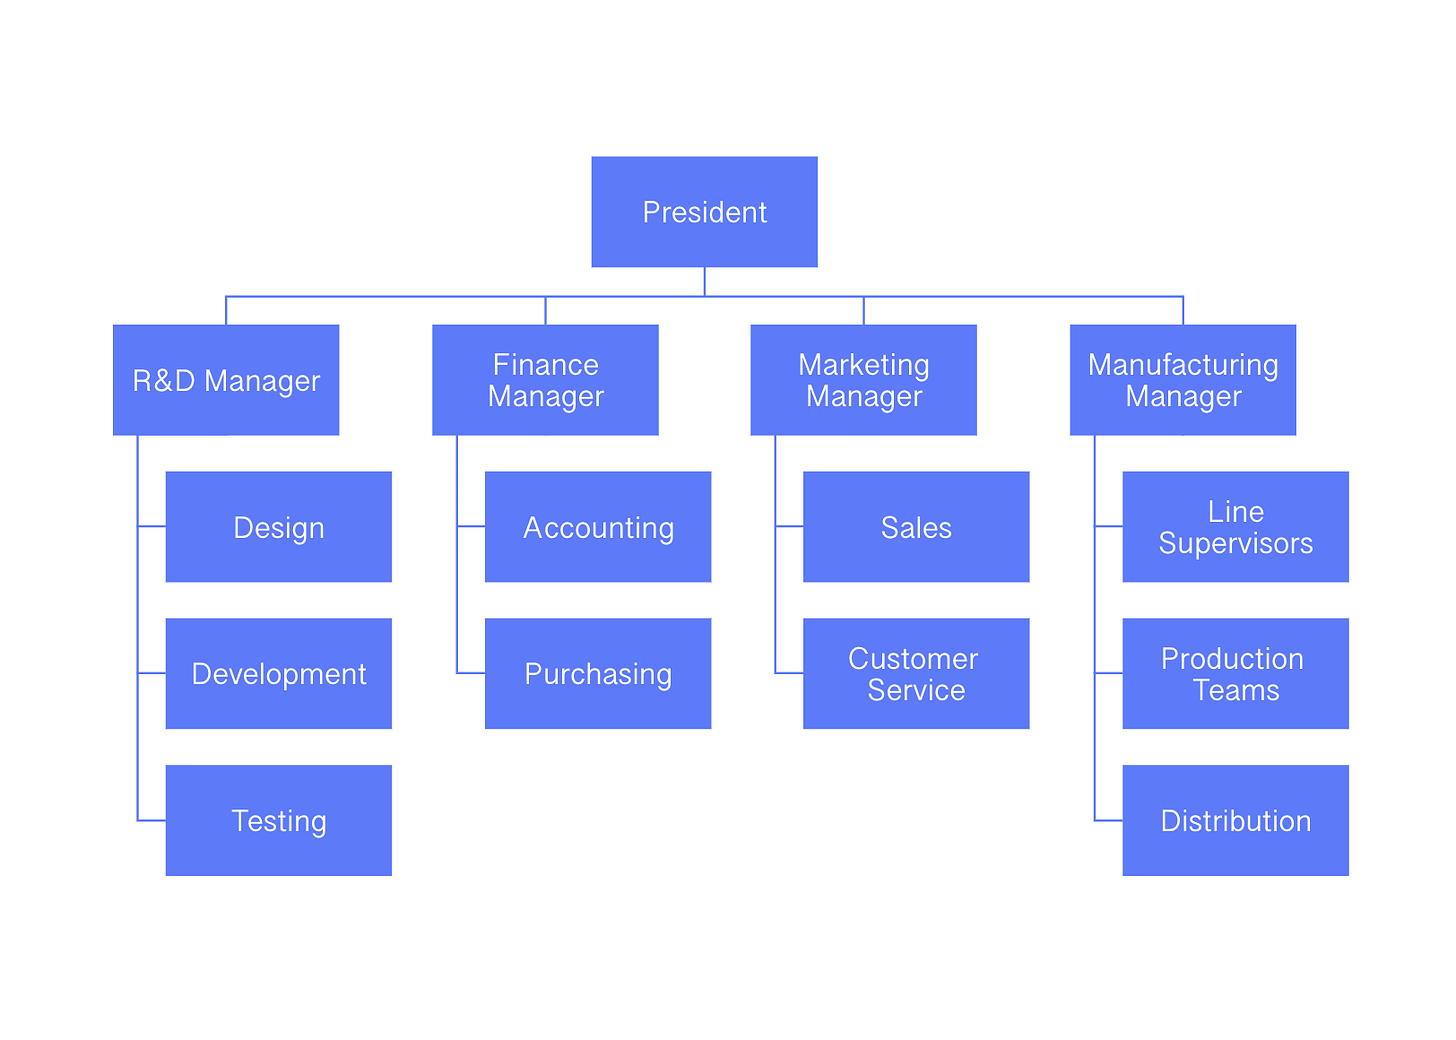 Reimagine the Org Chart - The Overlap